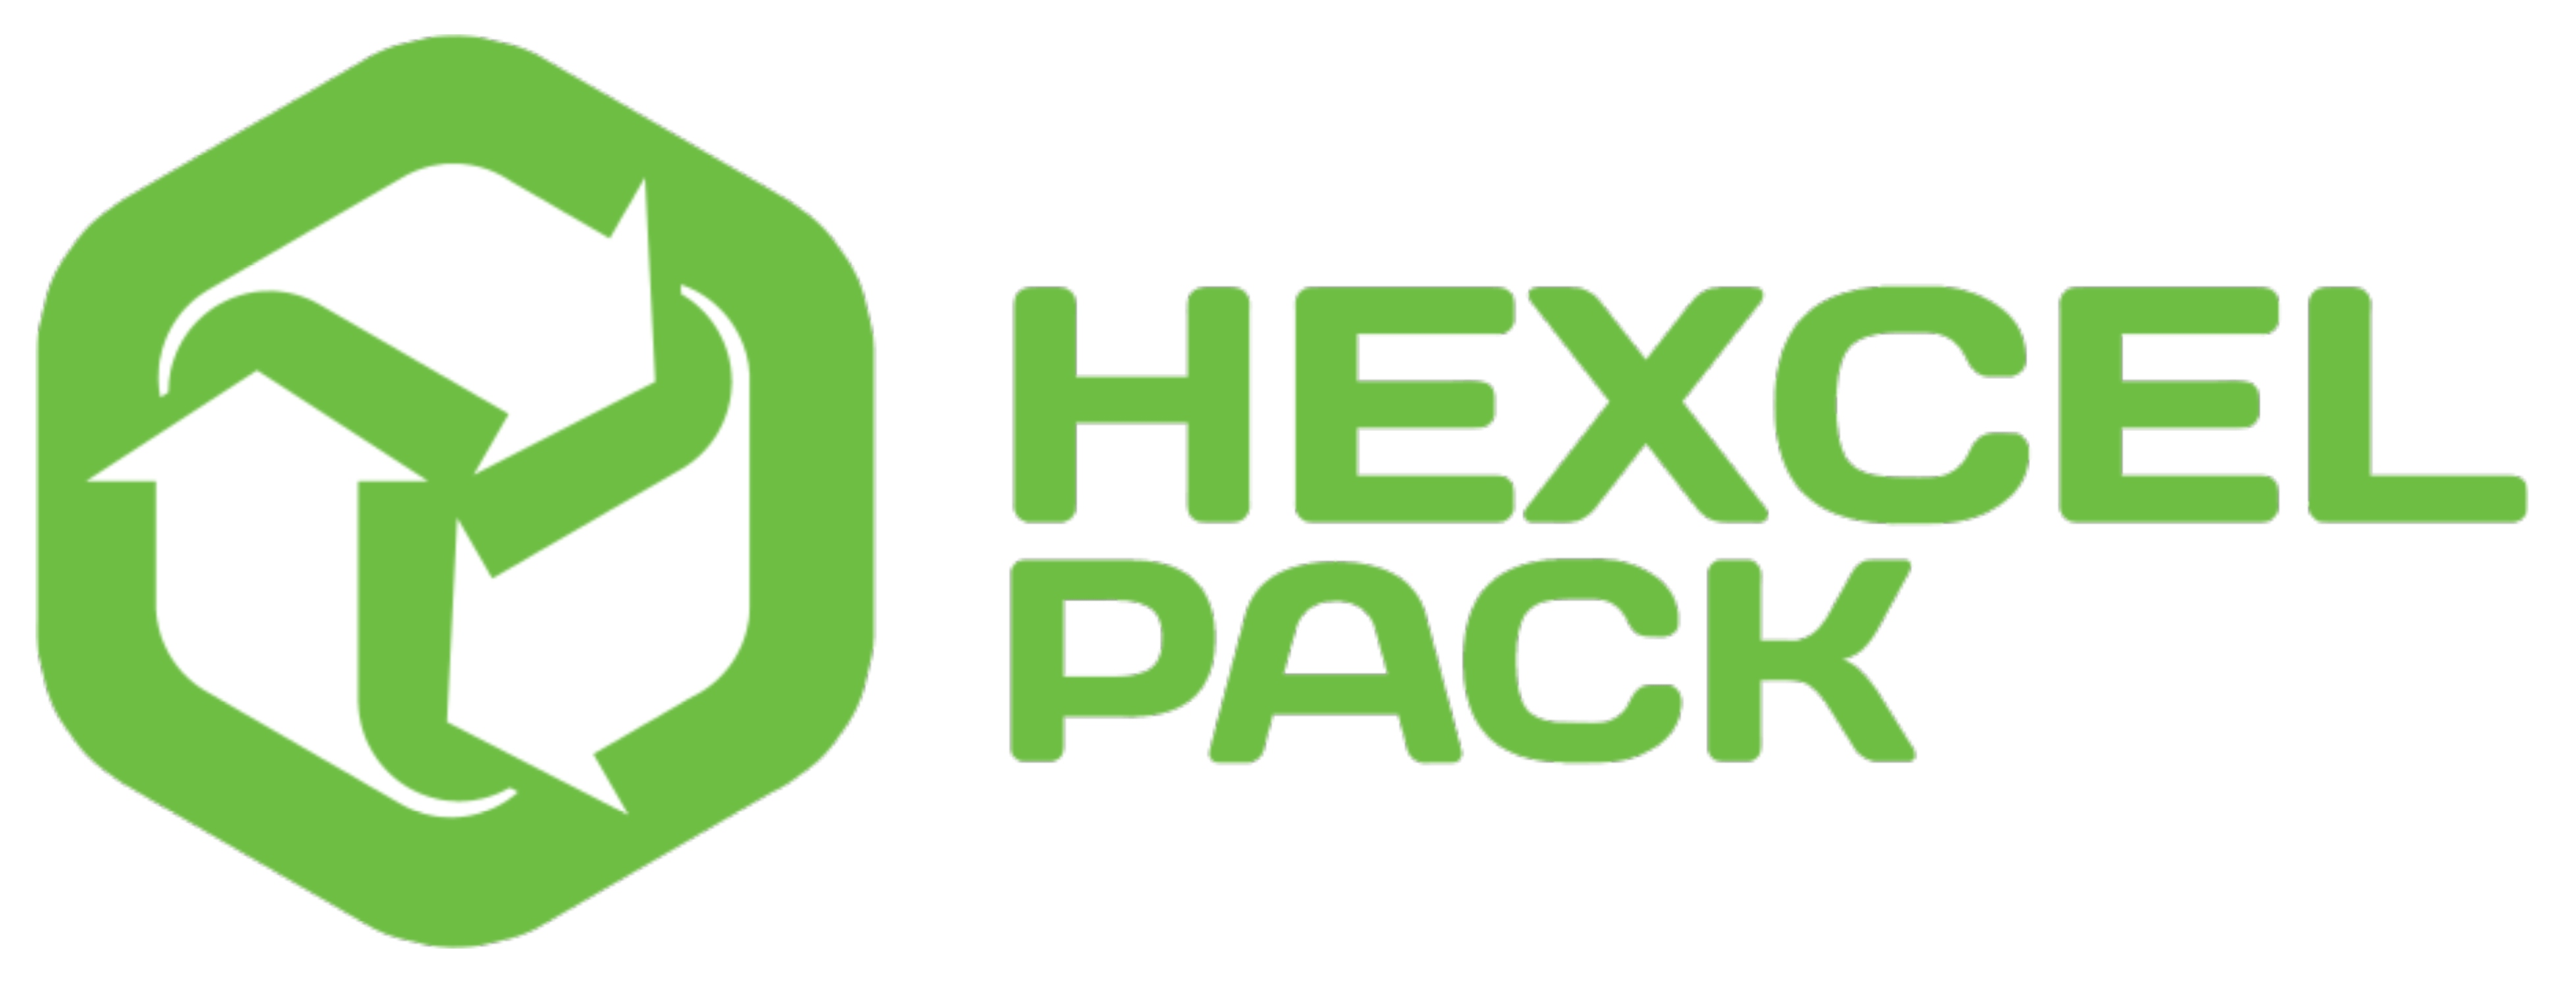 HexcelPack logo